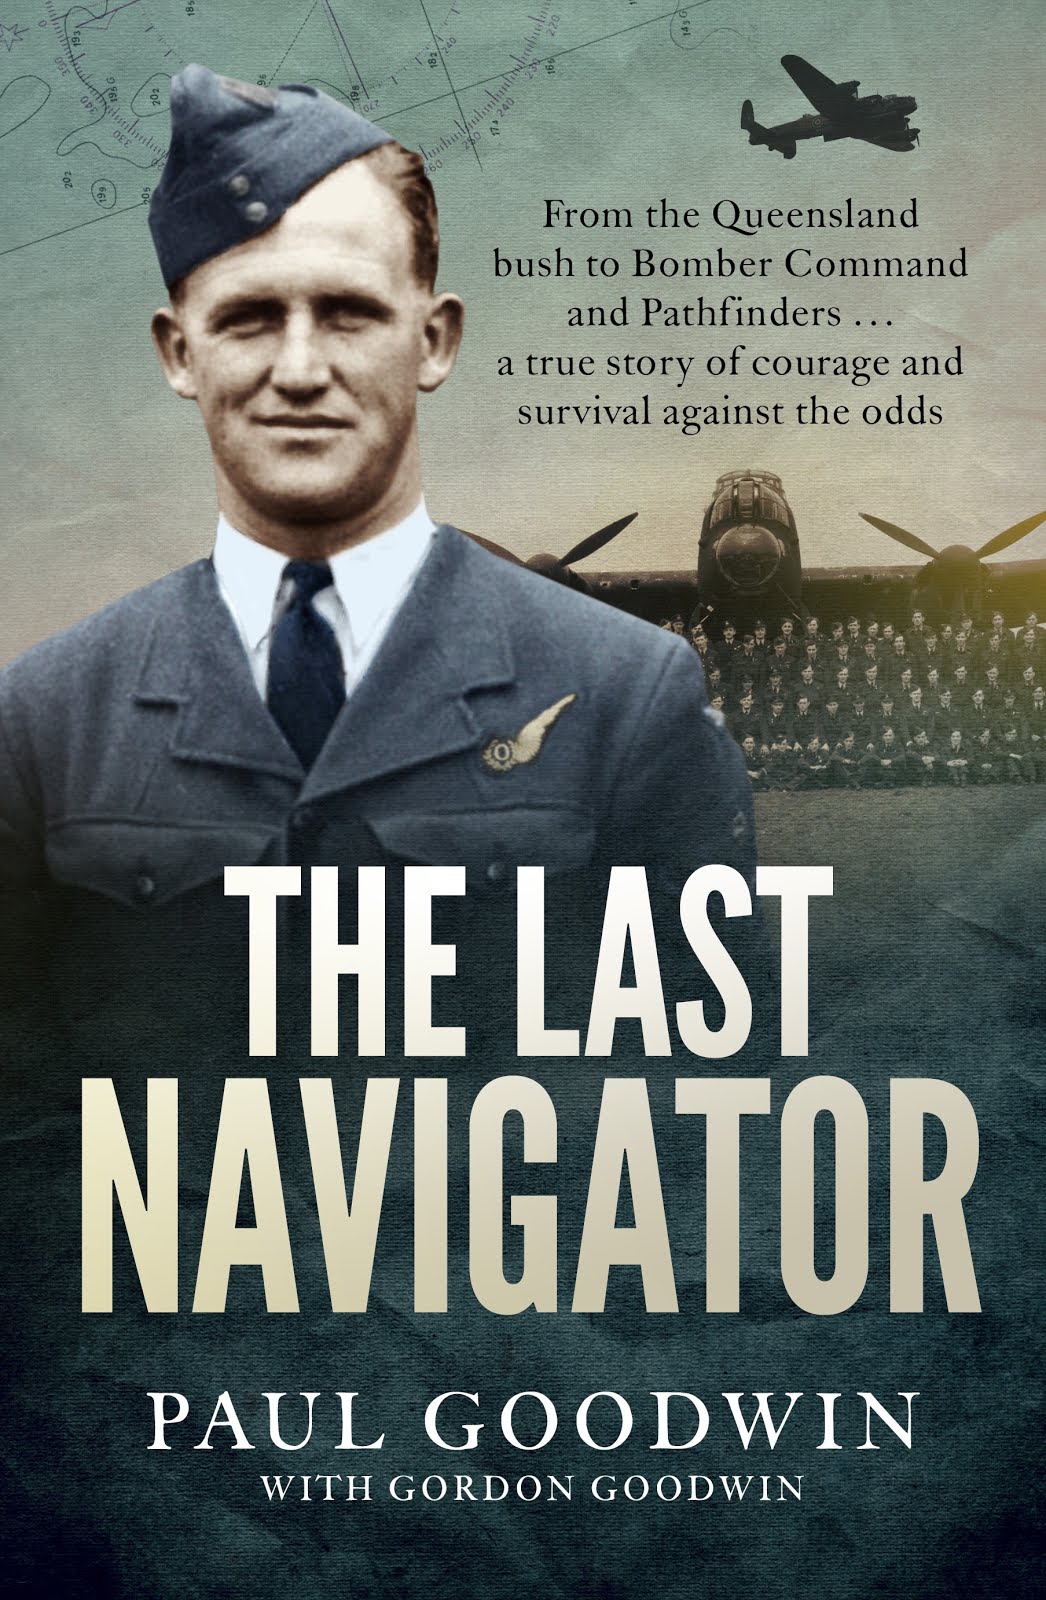 The Last Navigator